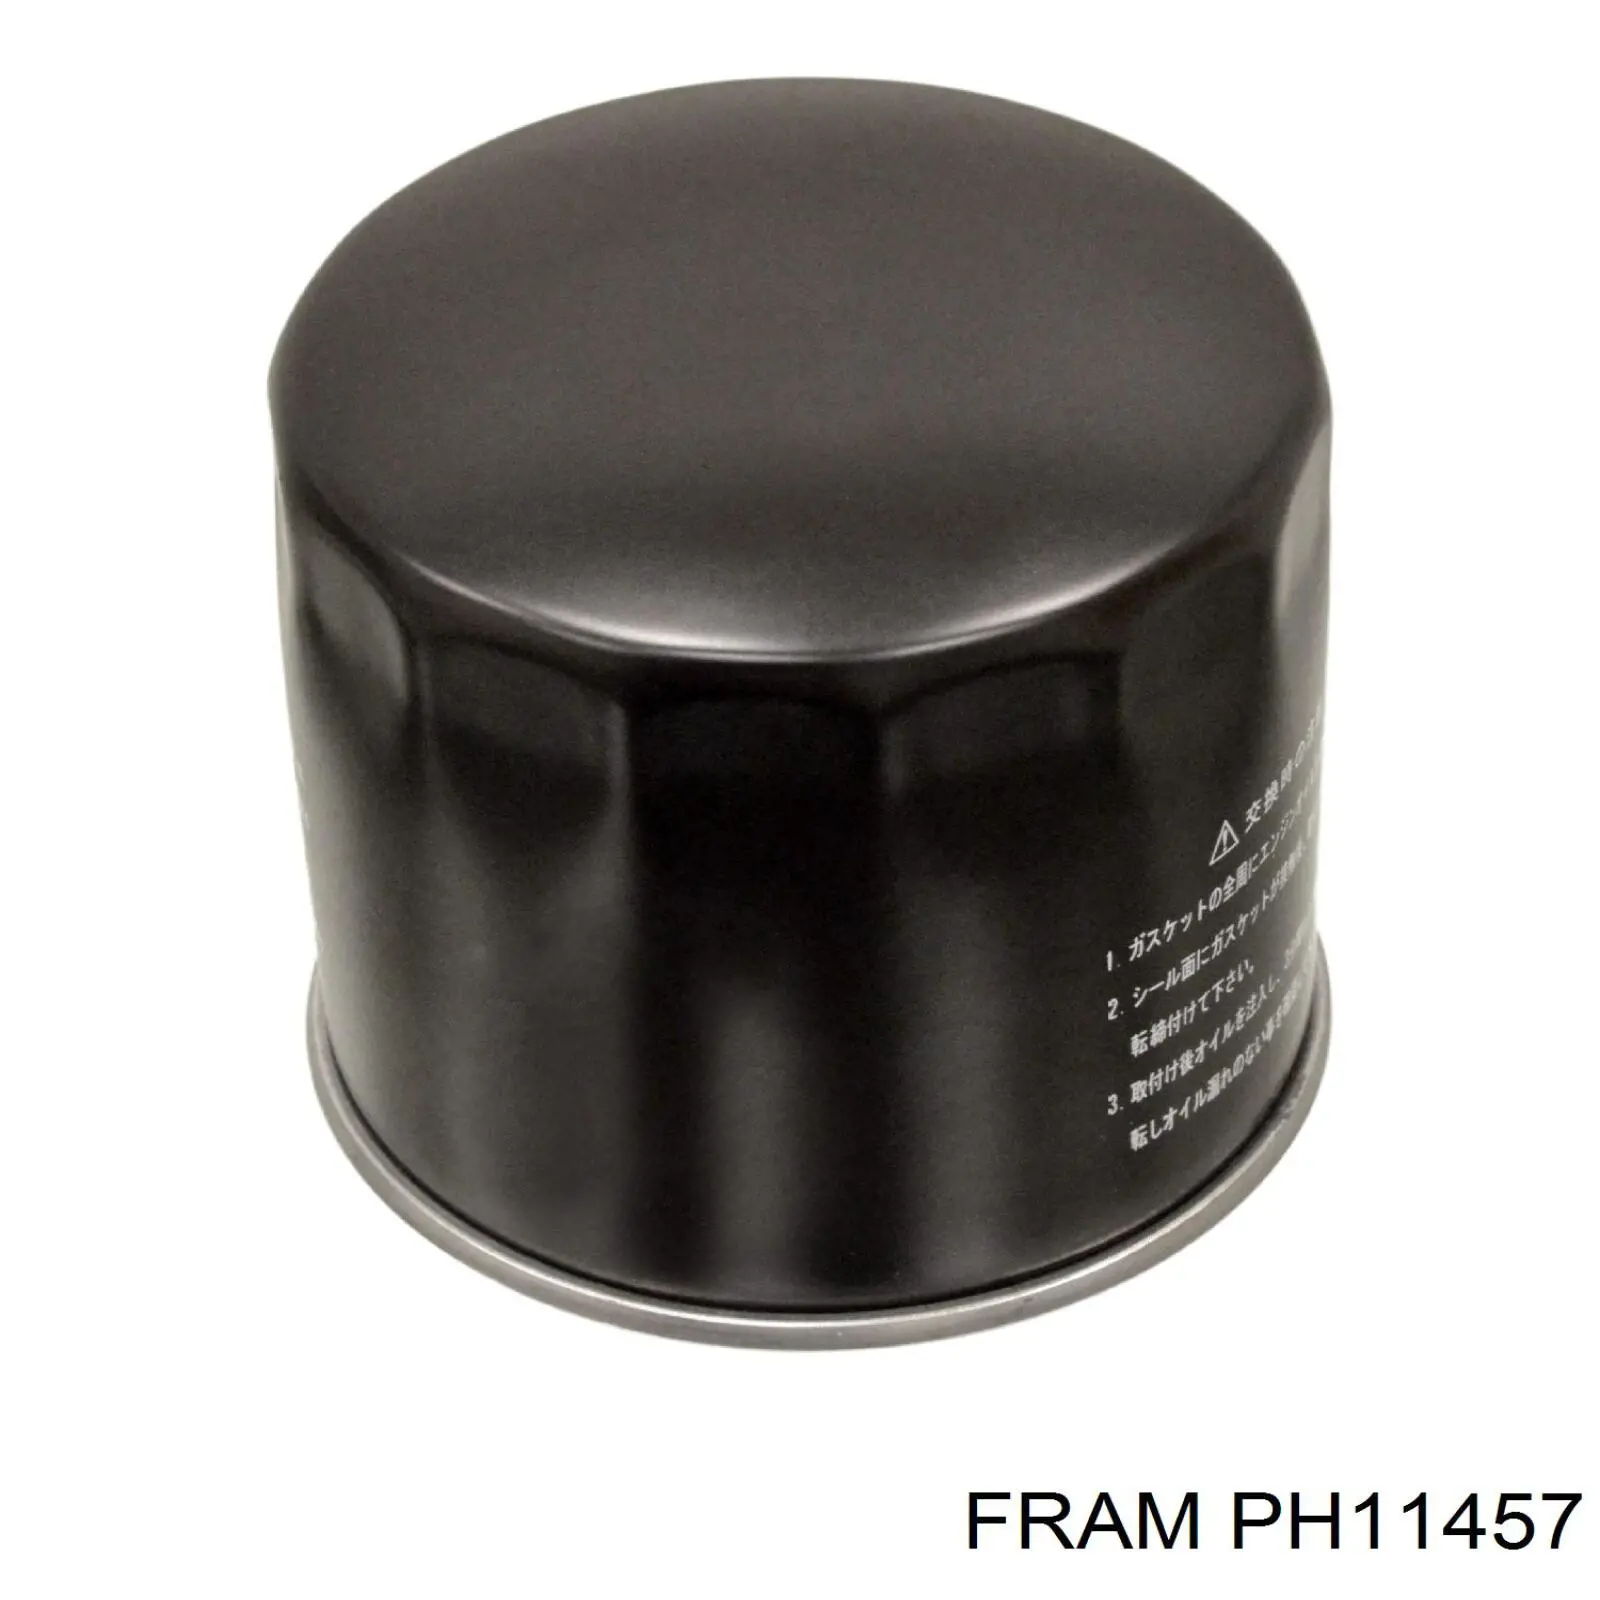 PH11457 Fram filtro de aceite